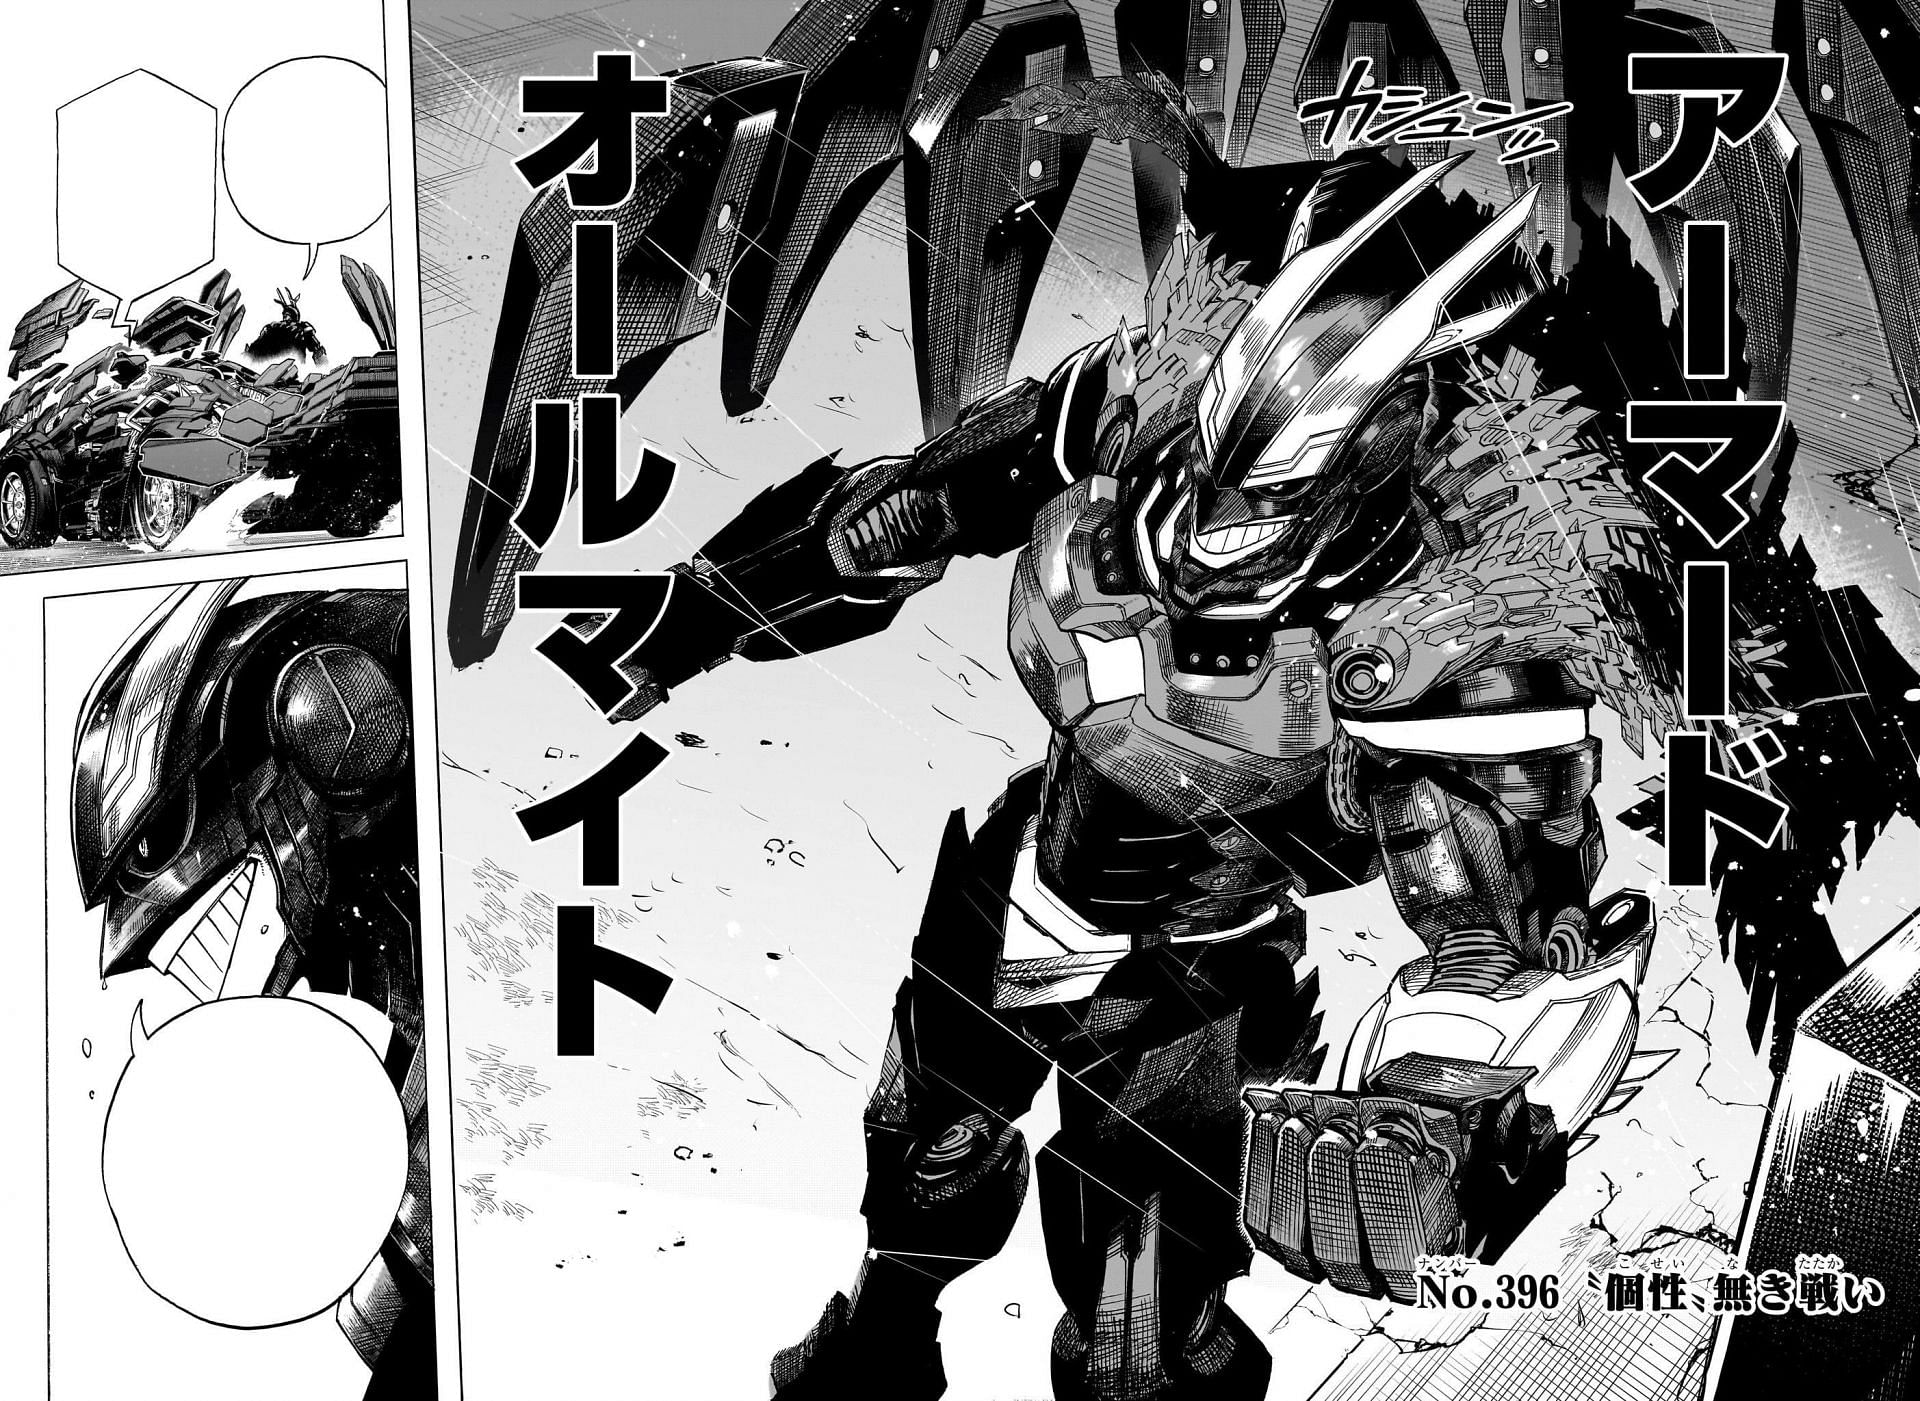 Armored All Might as seen in the manga (Image via Shueisha)